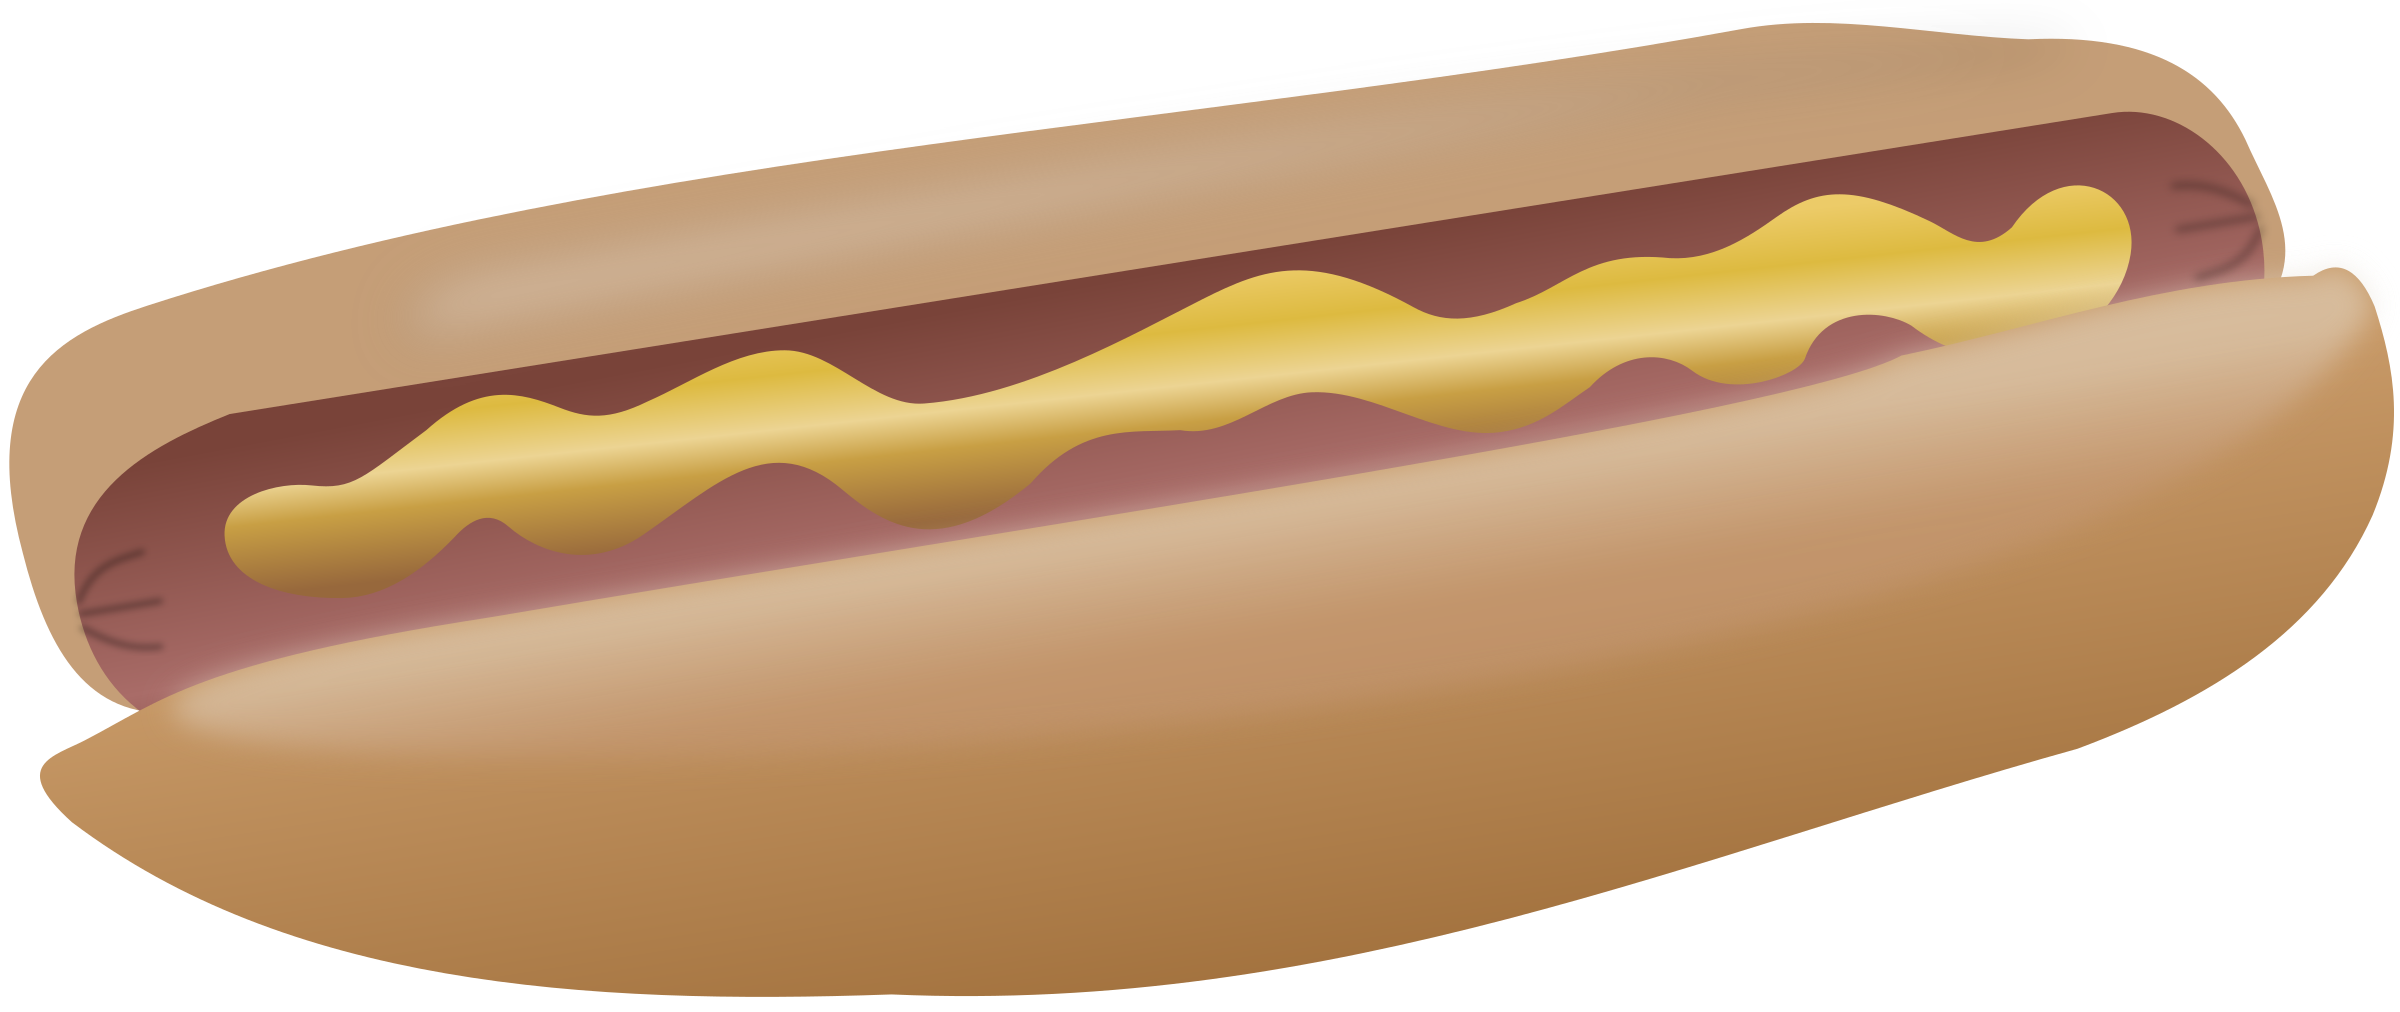 hotdog clipart svg